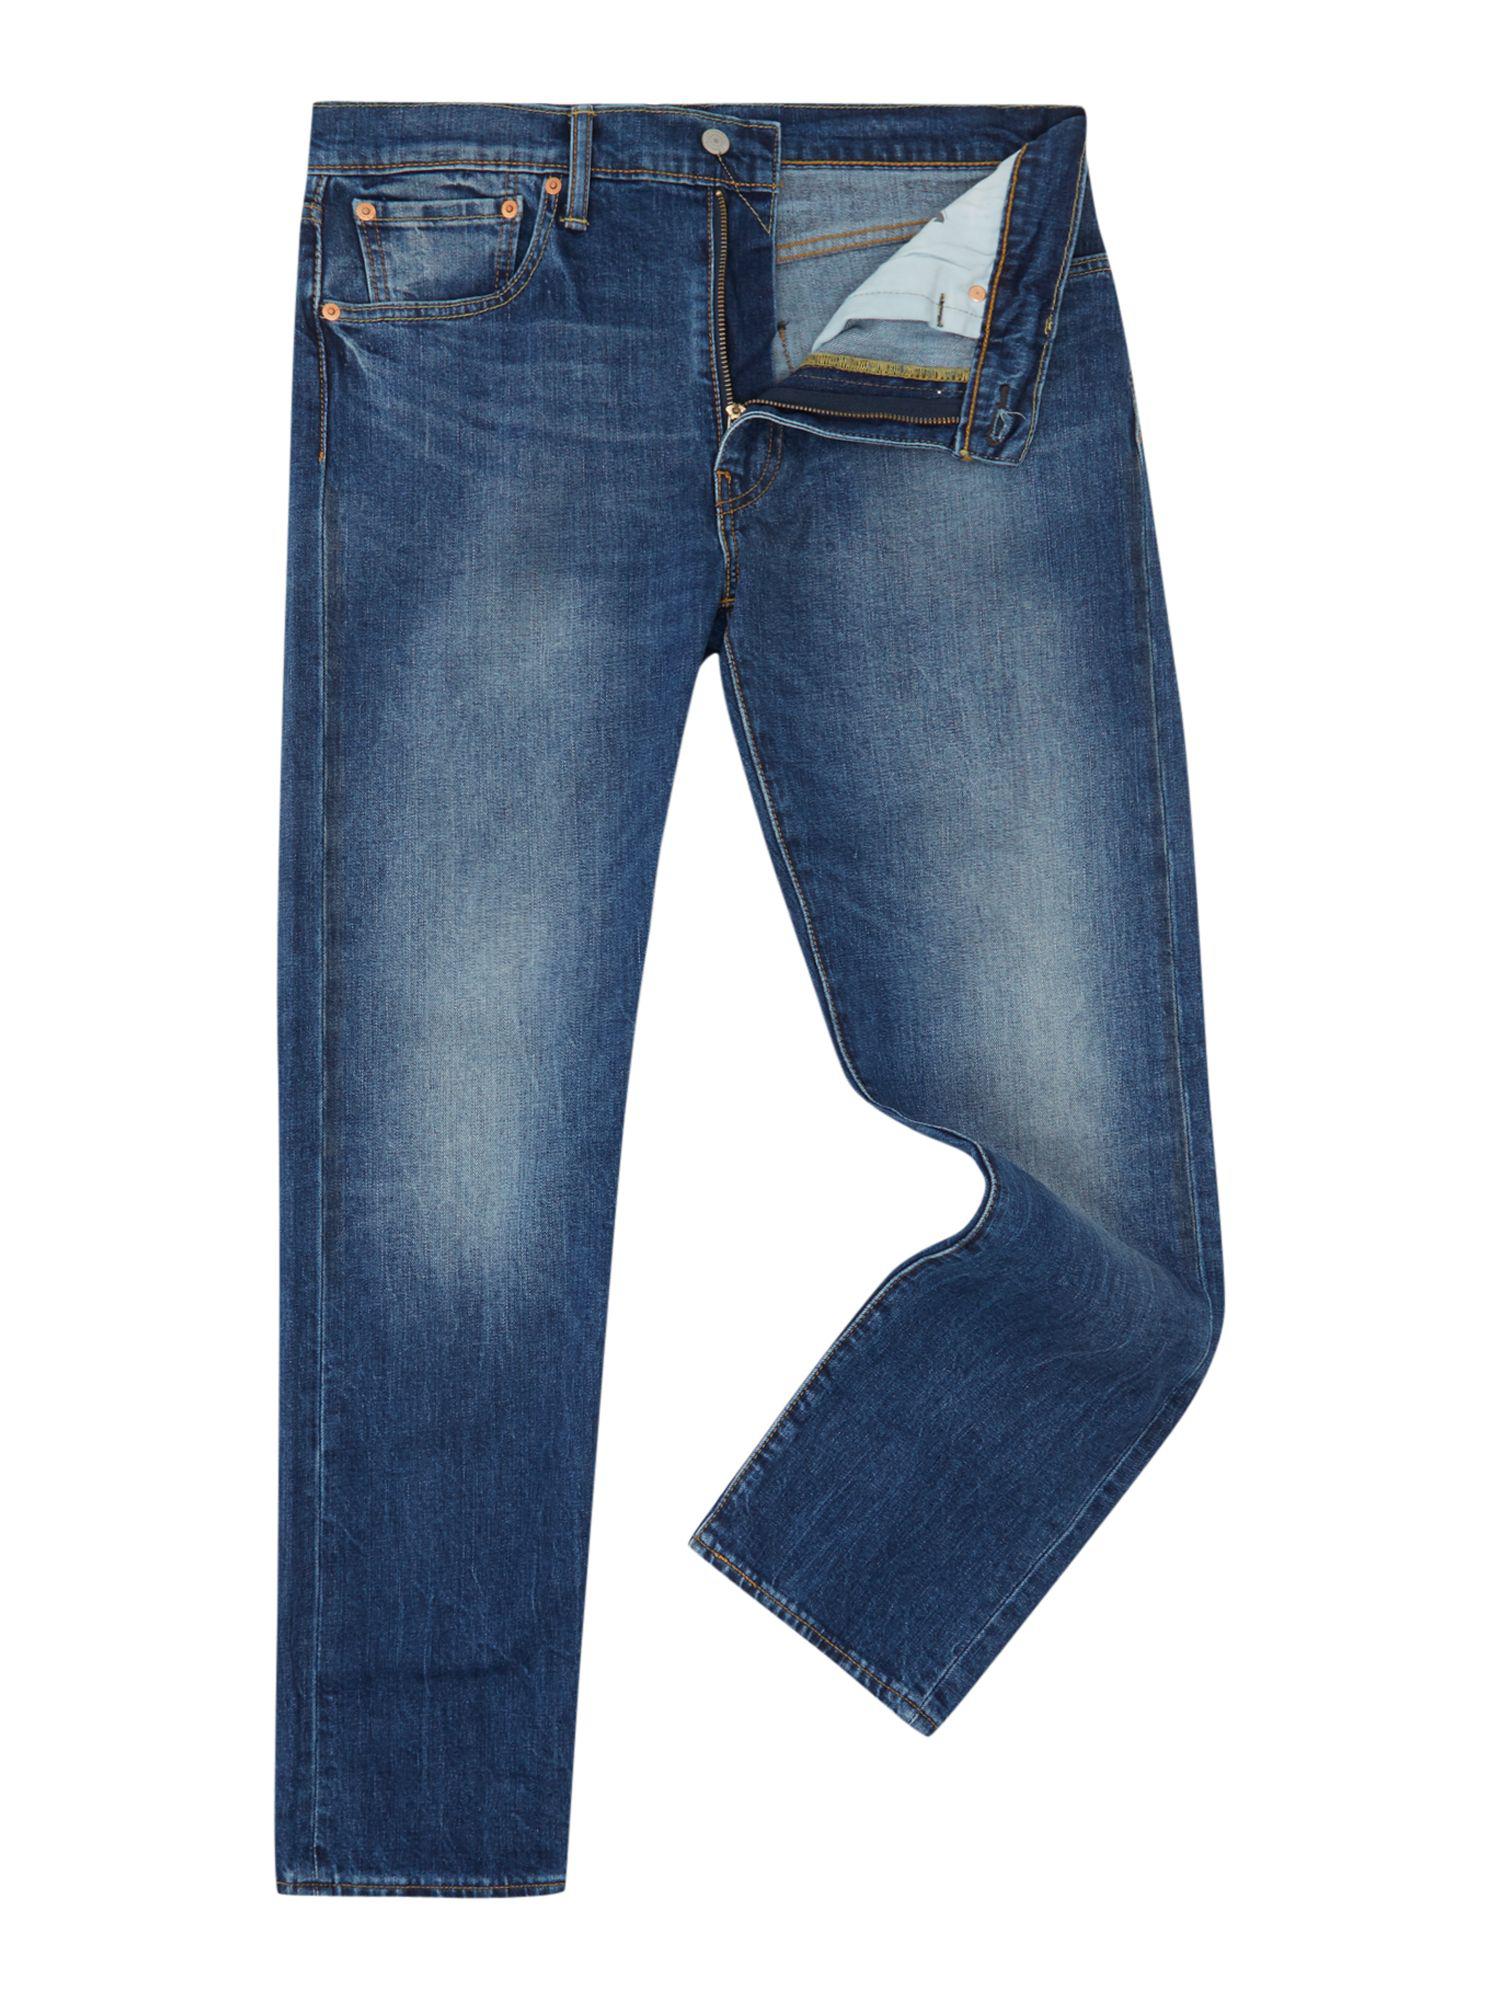 boscov's levis jeans